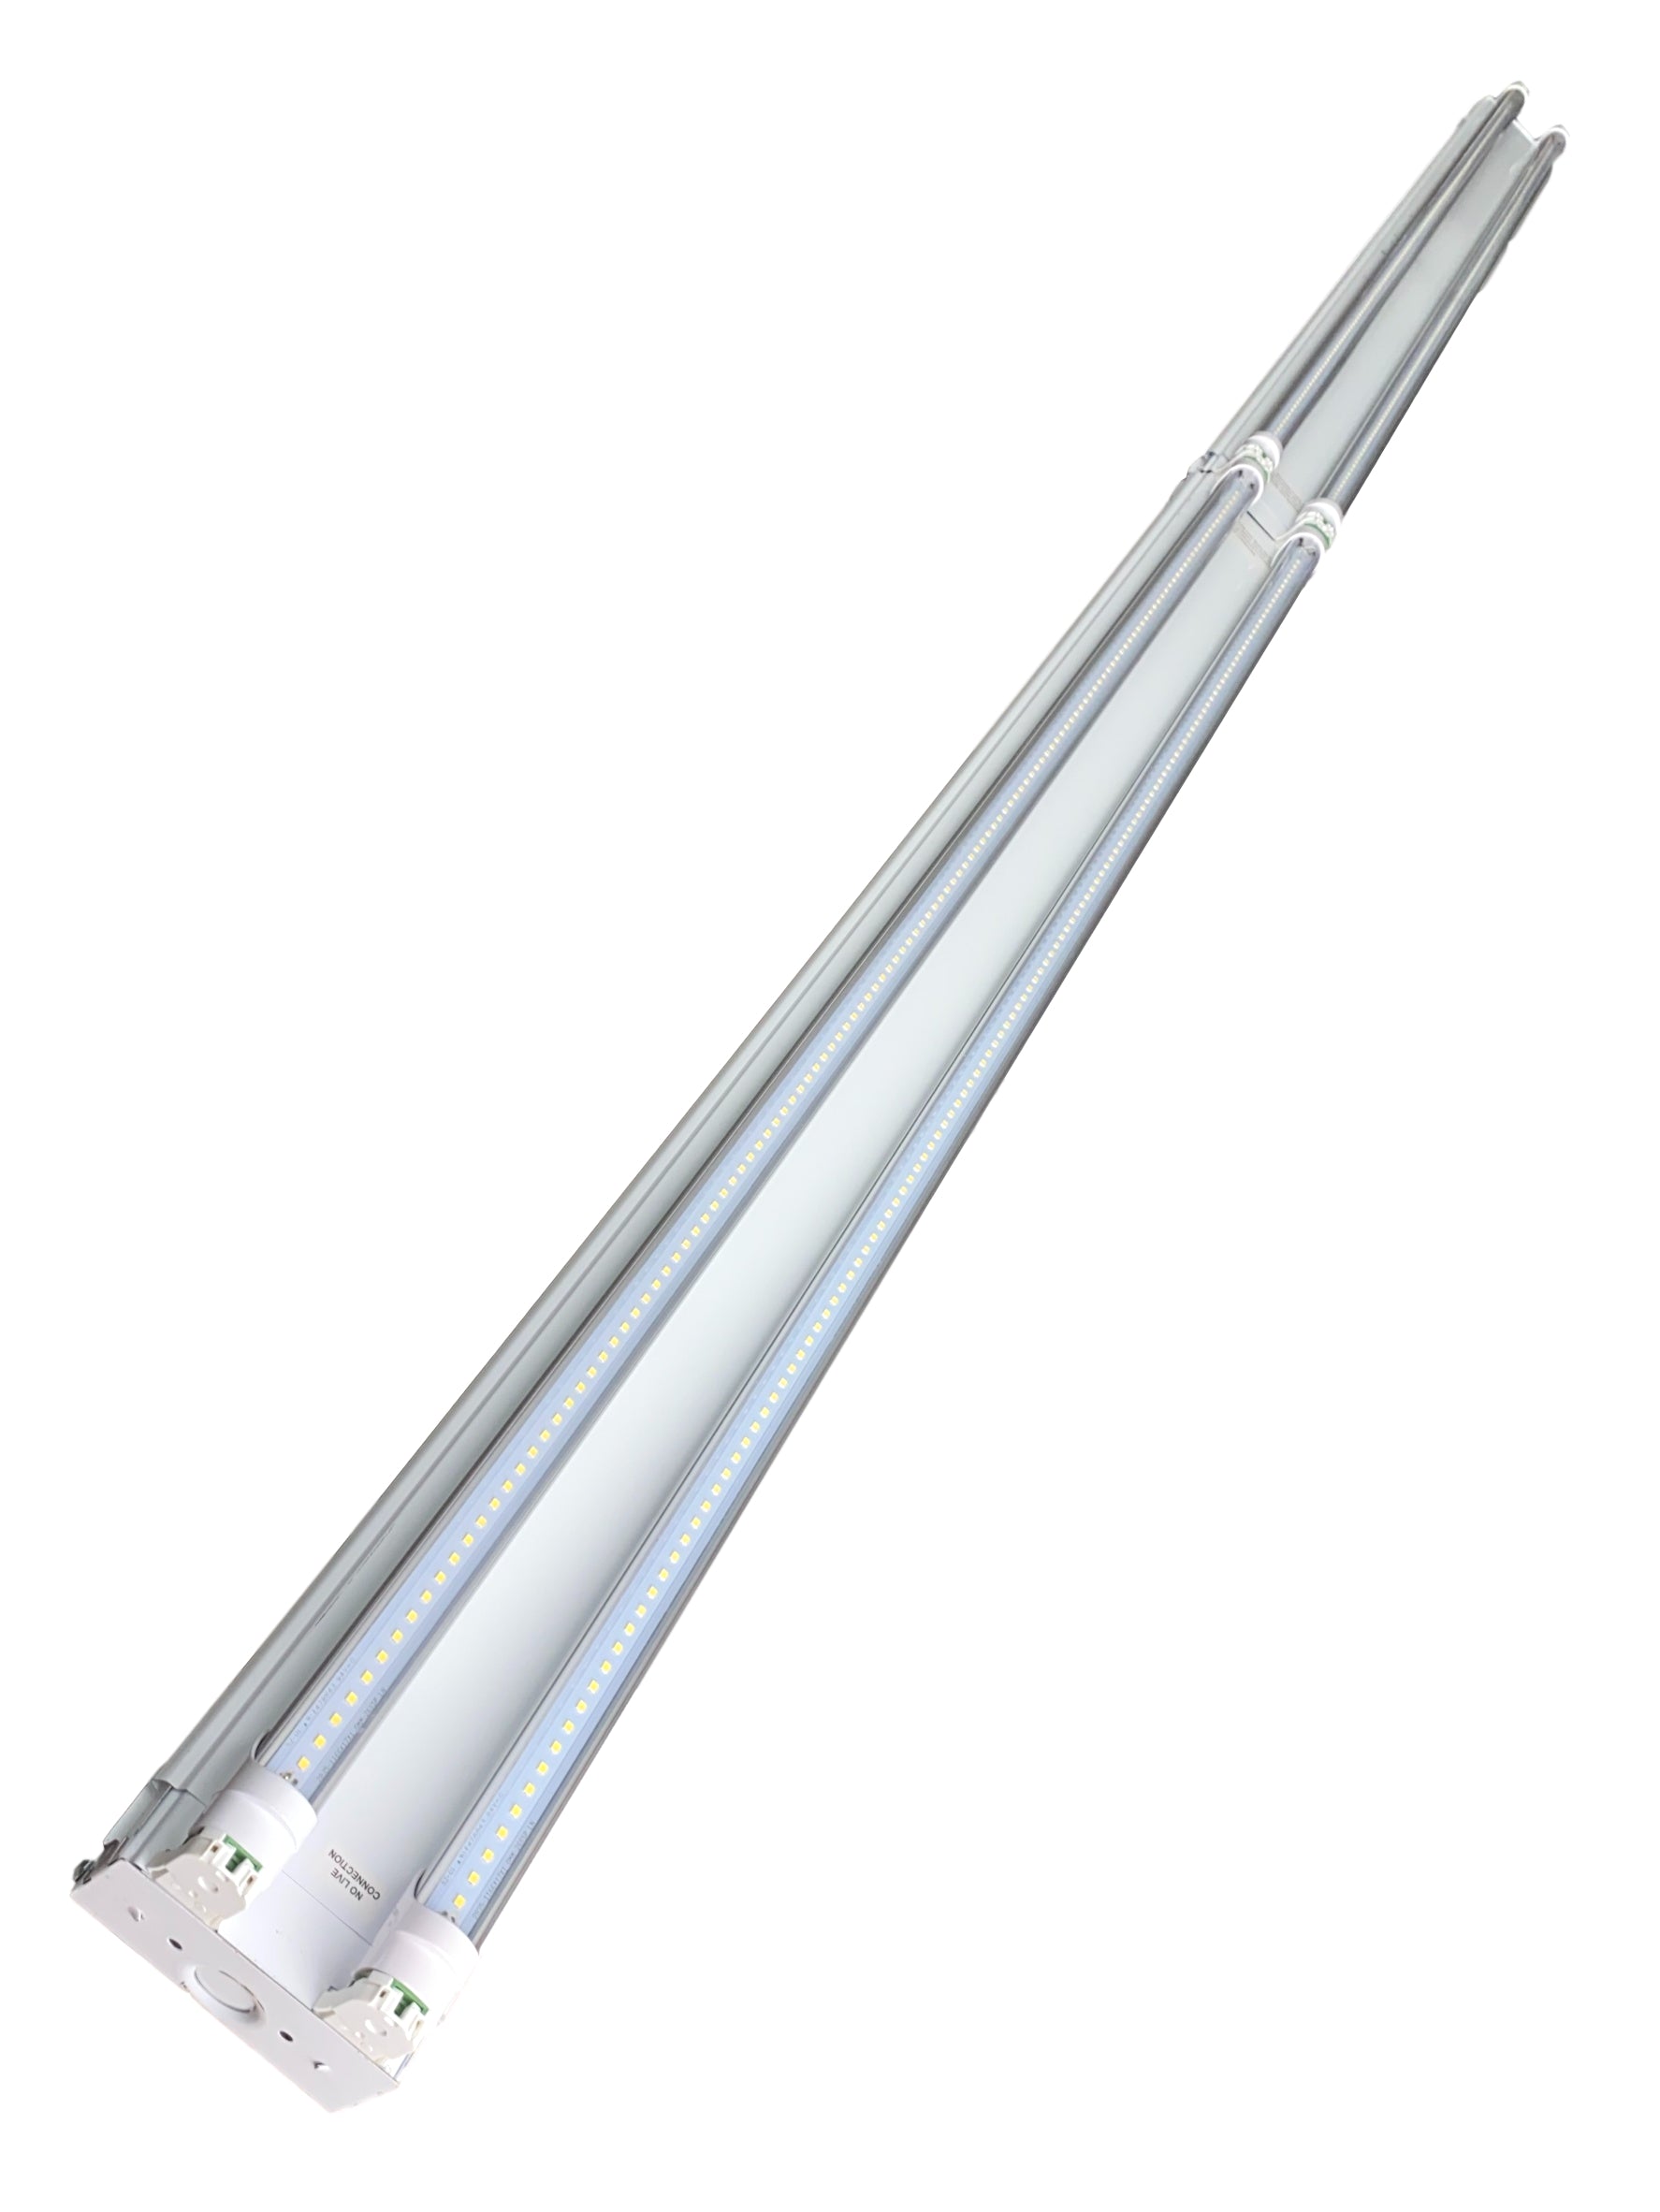 The BOLT 8' – 4 Lamp LED Shop Light – 12,400 Lumens CLEAR